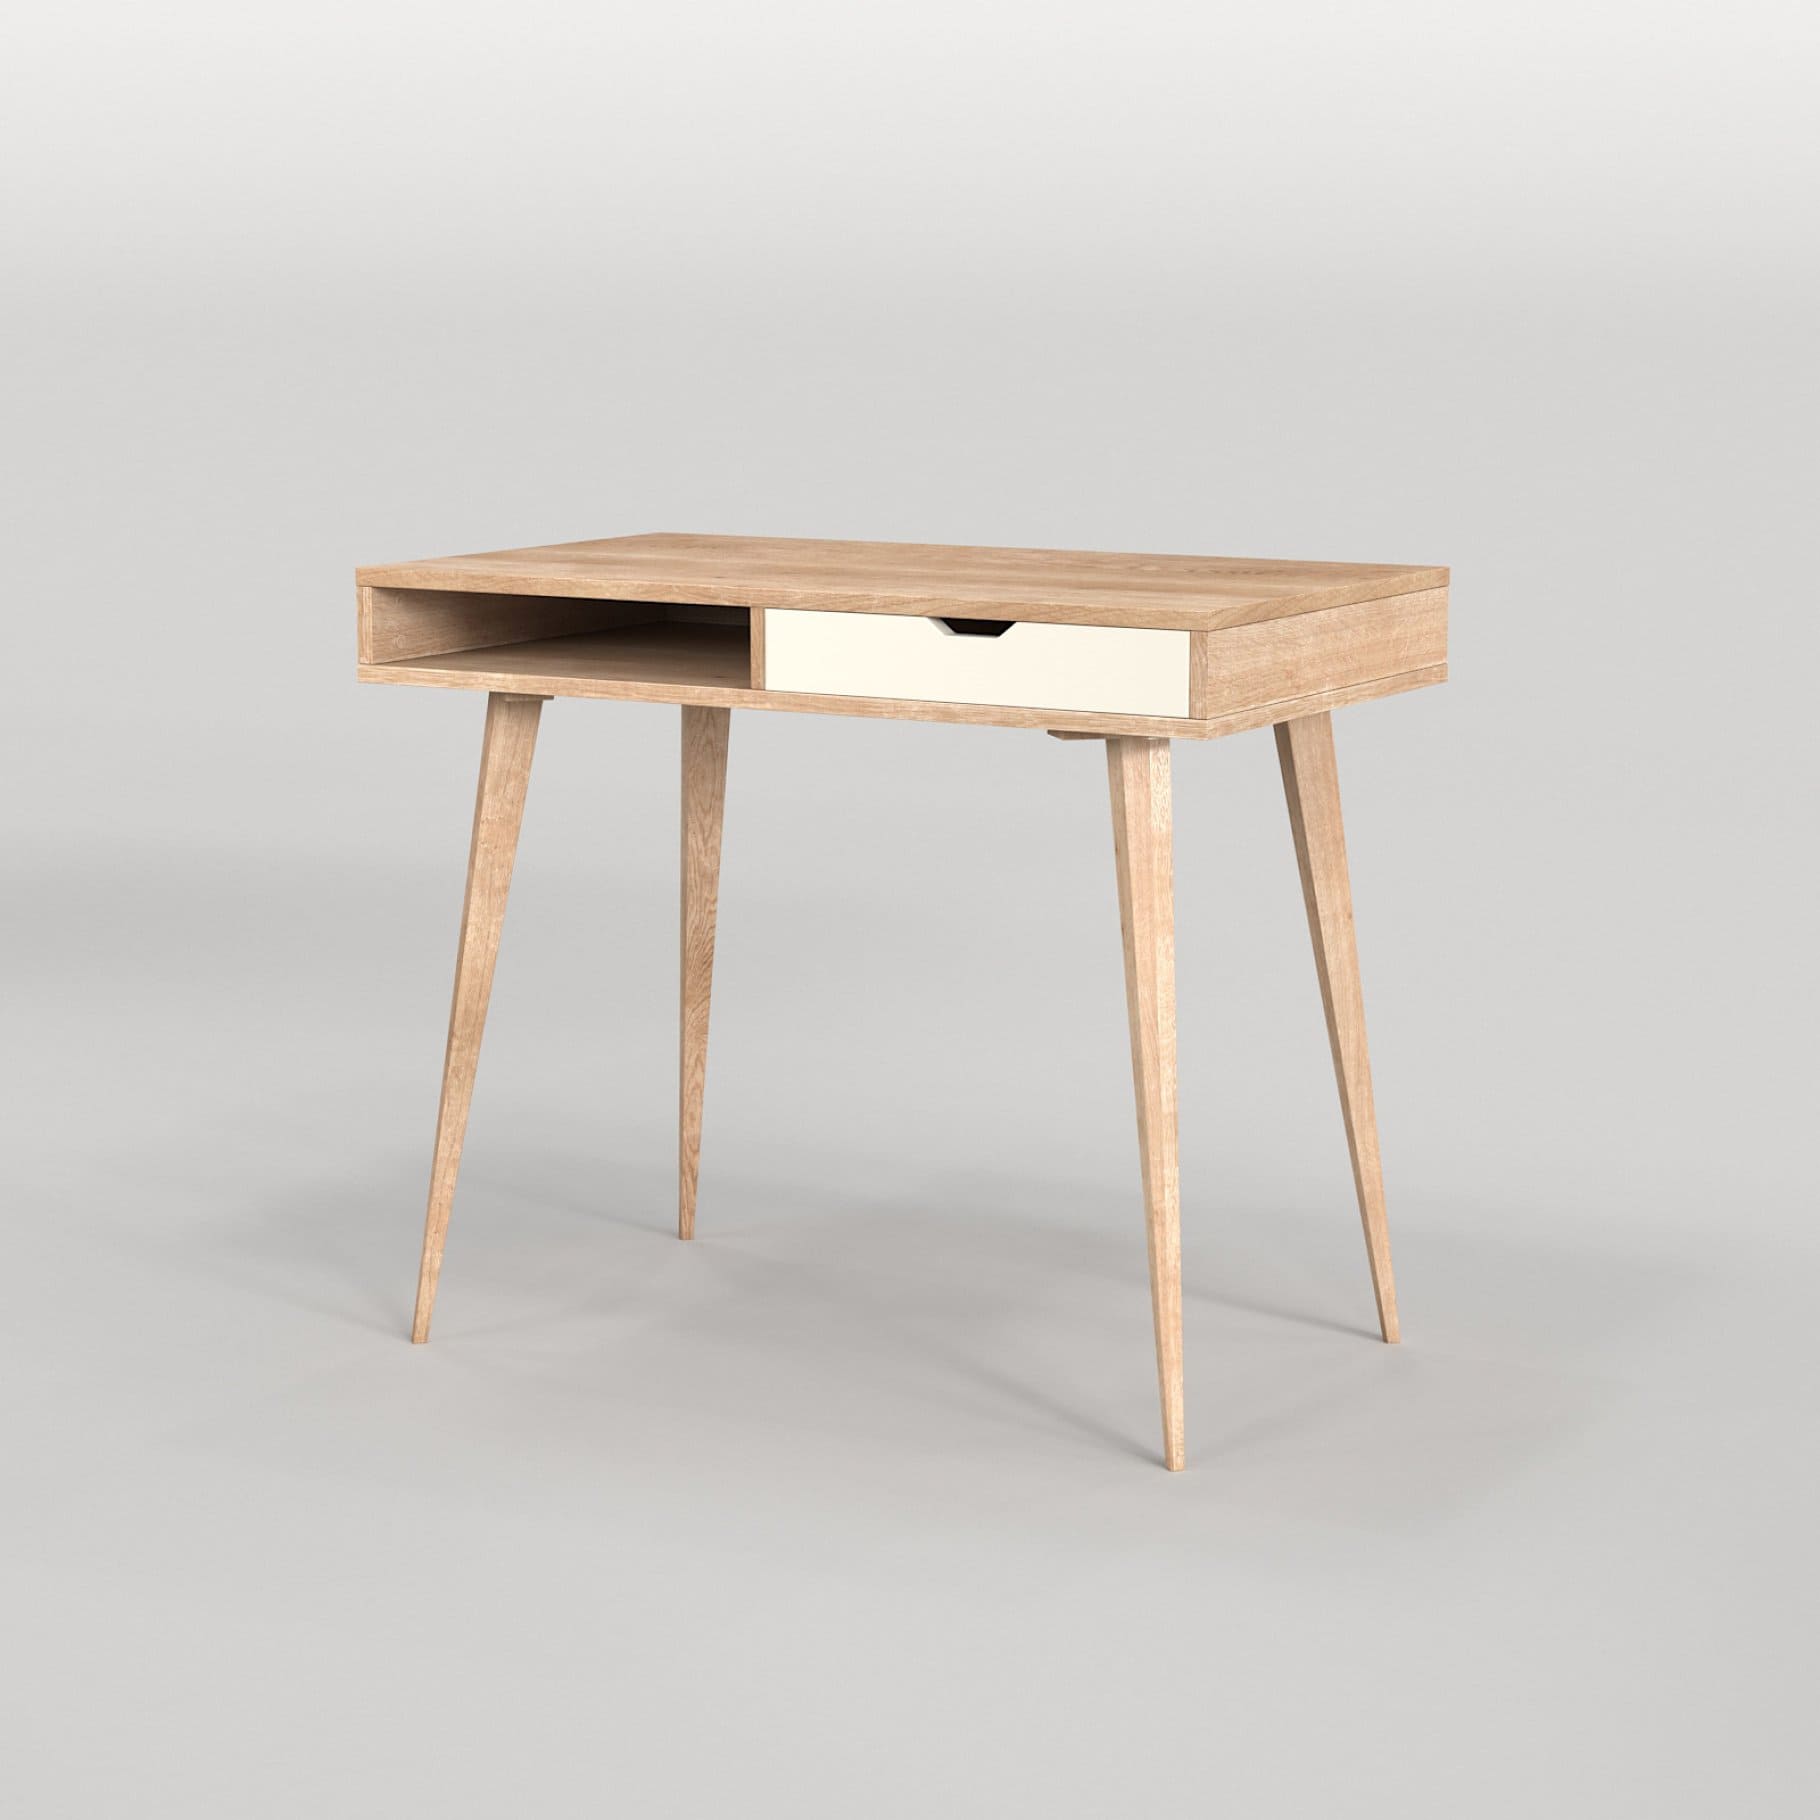 Scandinavian desk with shelves model 04 on a beige background.